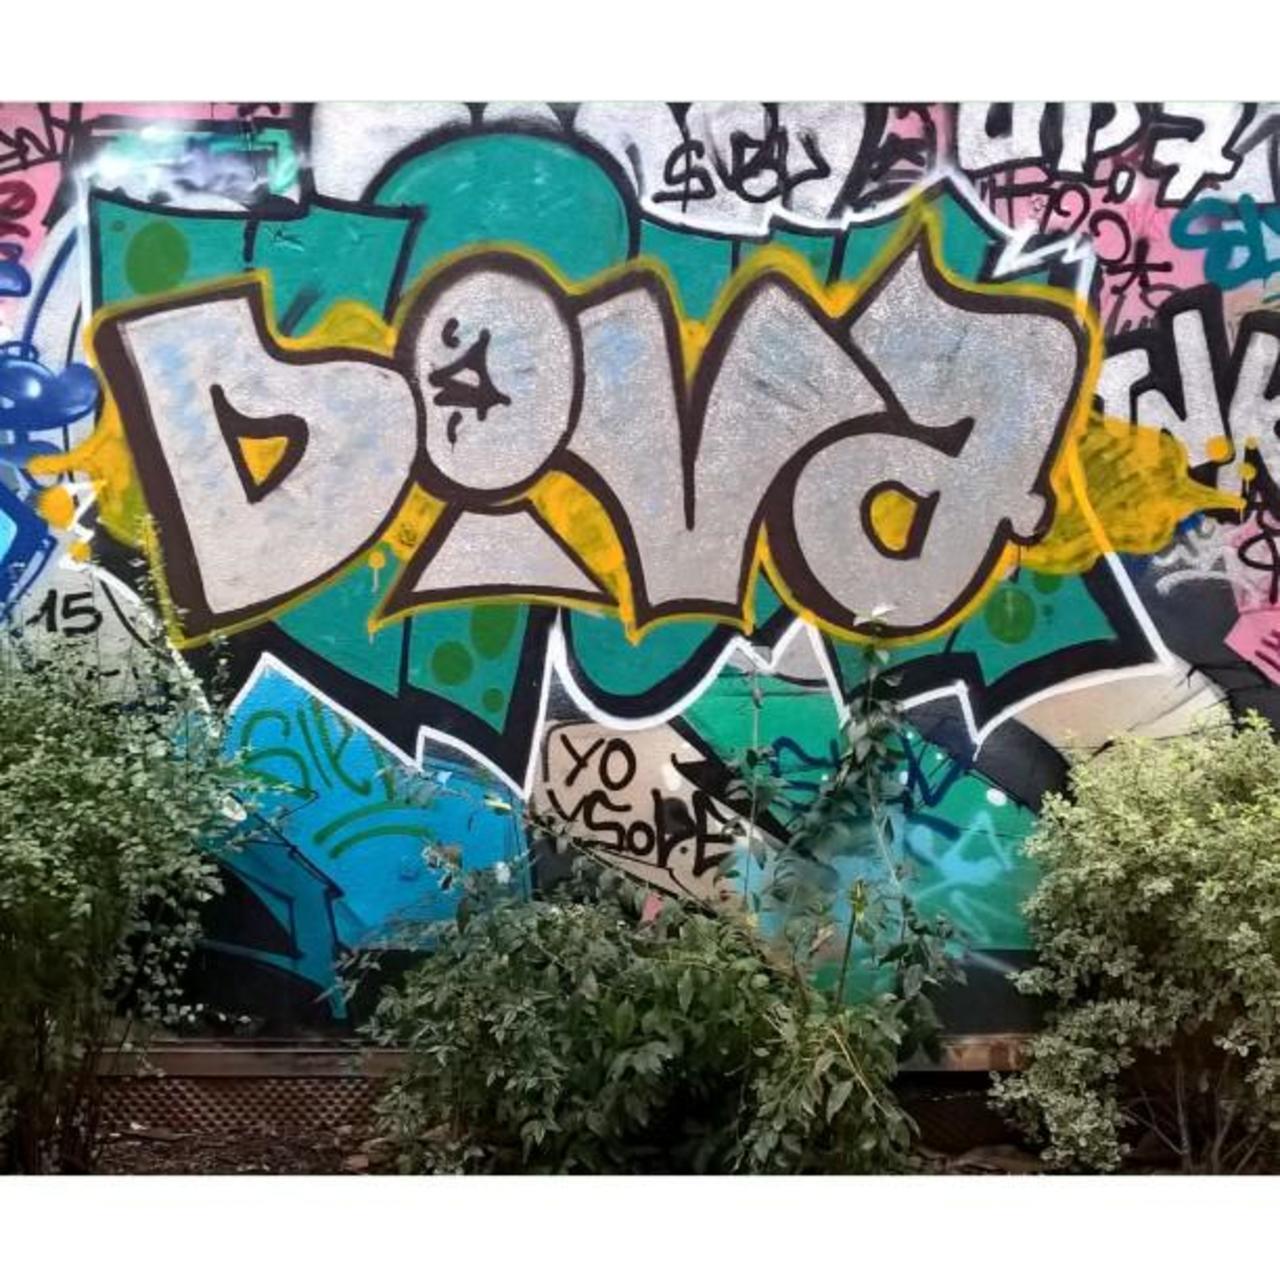 #Paris #graffiti photo by @maxdimontemarciano http://ift.tt/1hIVGBL #StreetArt http://t.co/ARnQCO4gkQ